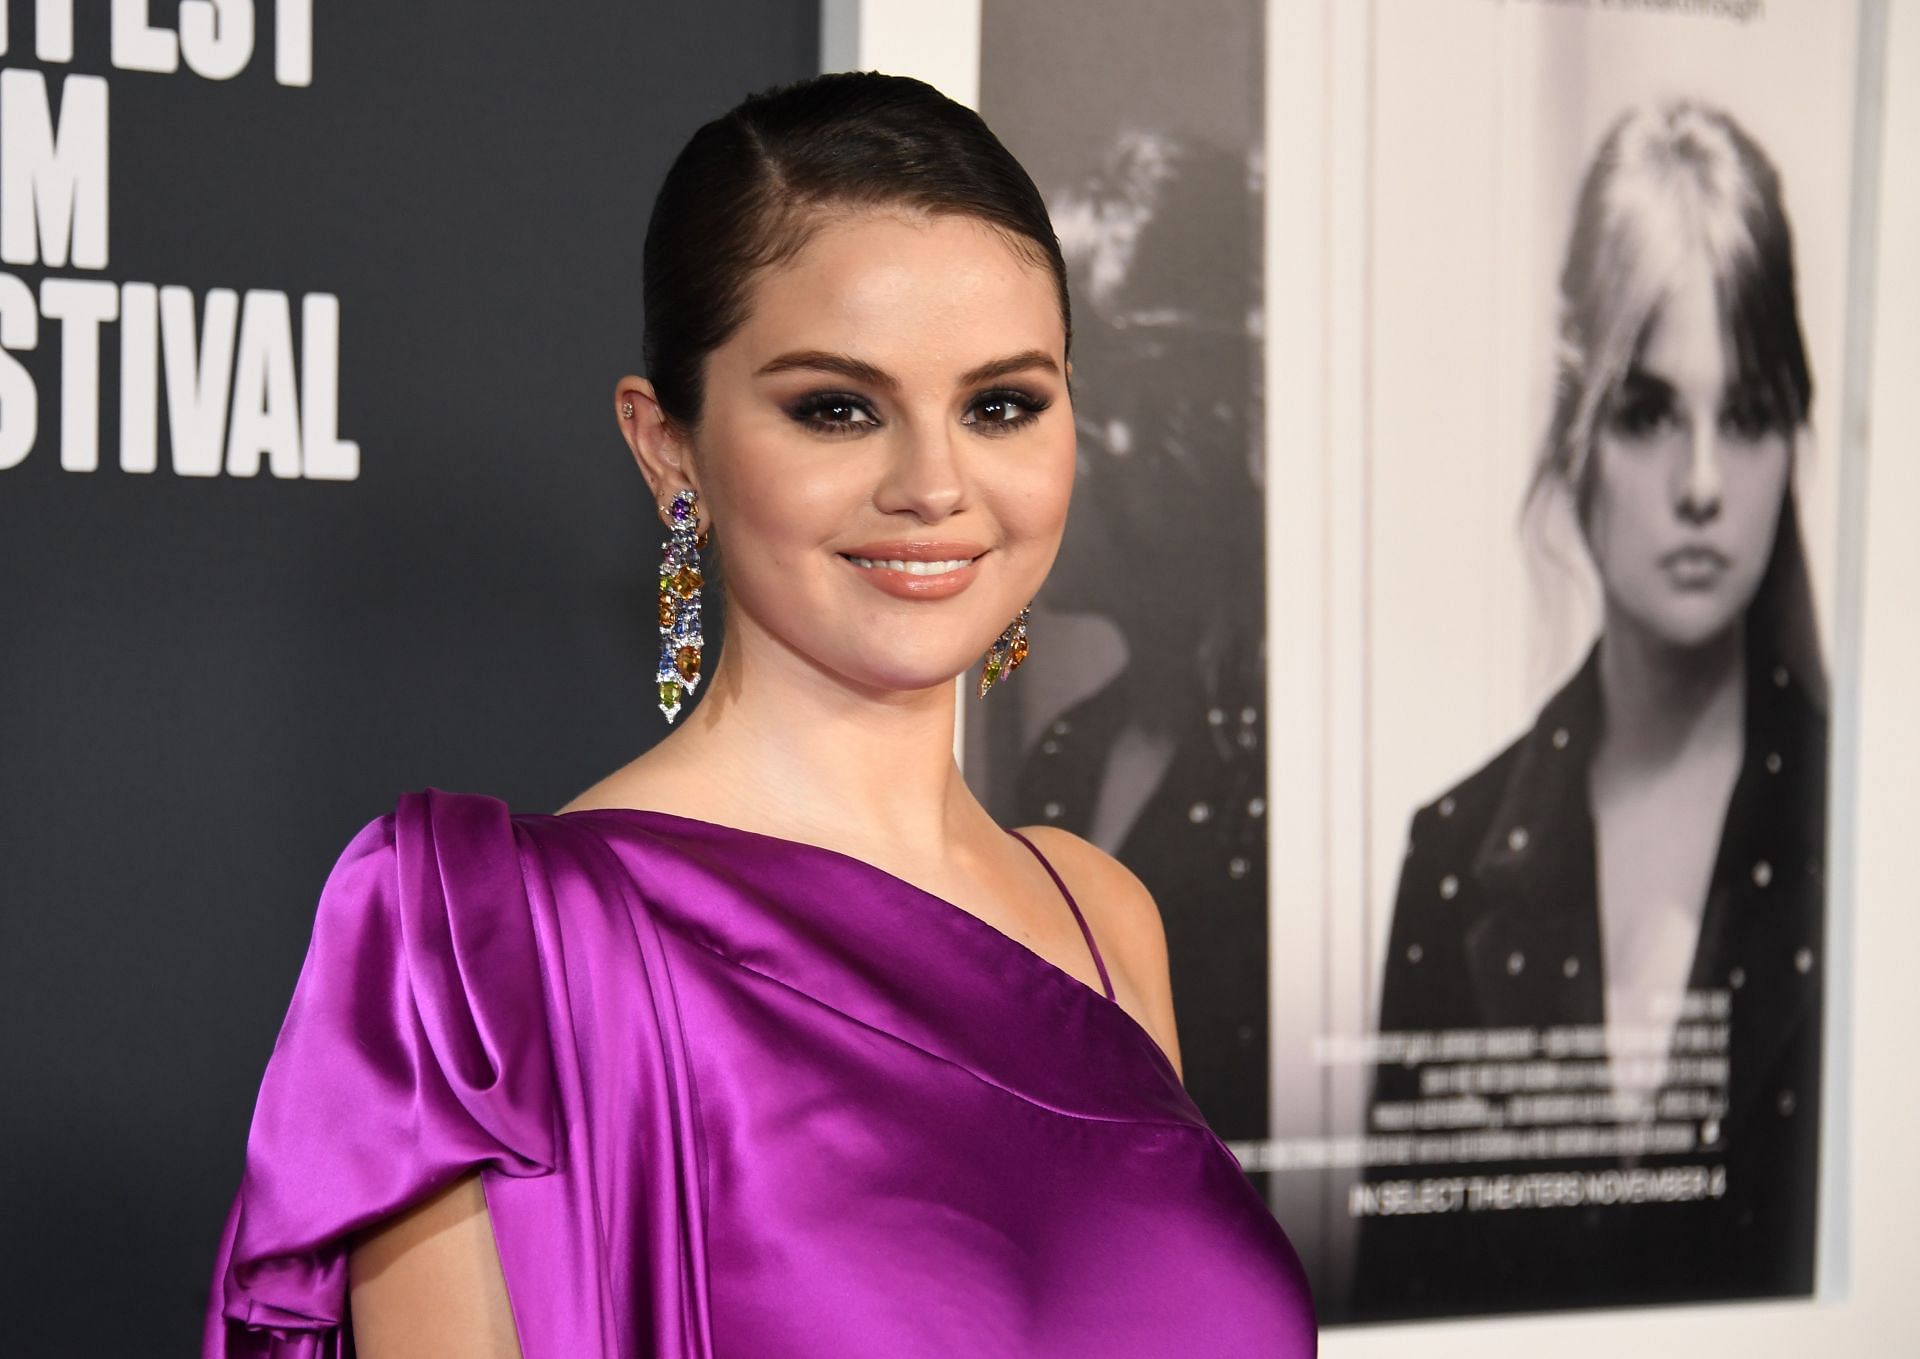 2022 AFI Fest - "Selena Gomez: My Mind And Me" Opening Night World Premiere - Arrivals (Image via Jon Kopaloff/Getty Images)